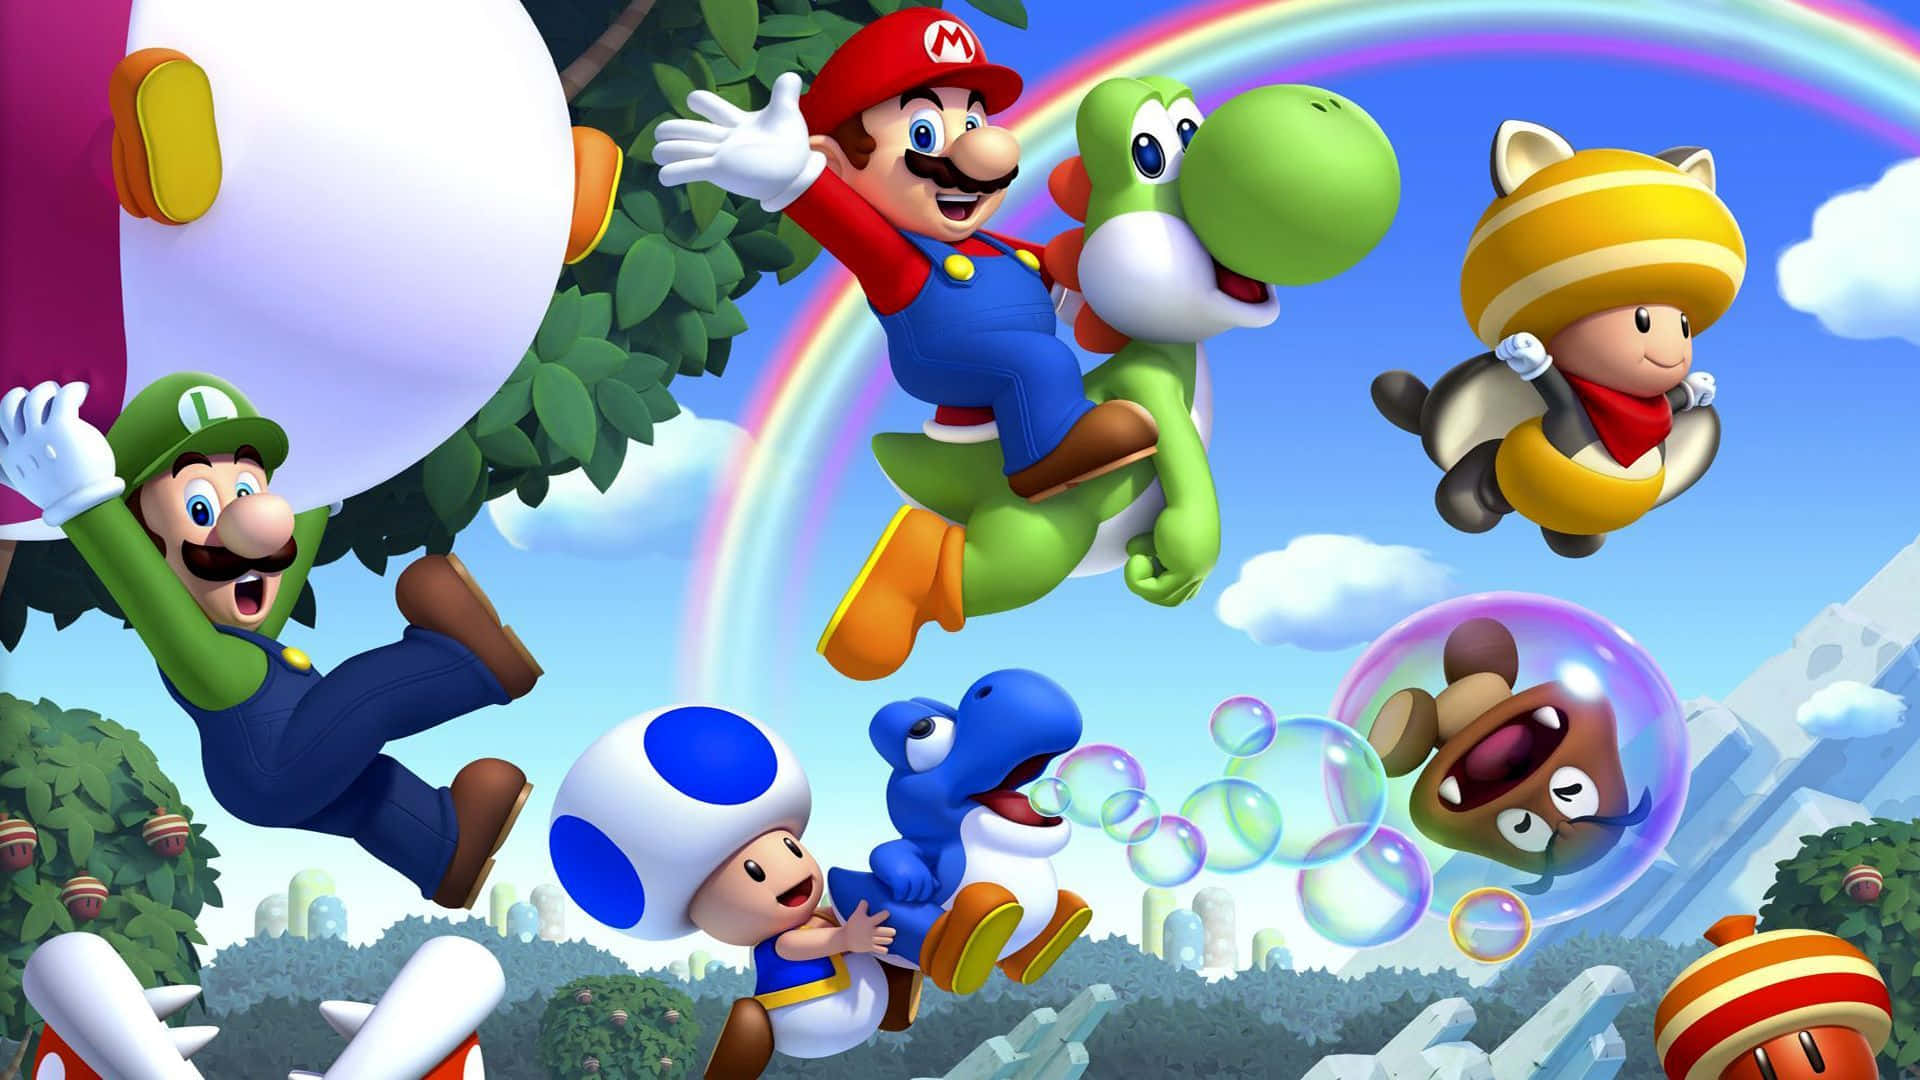 Enter The Cartoony World Of Classic Super Mario Wallpaper